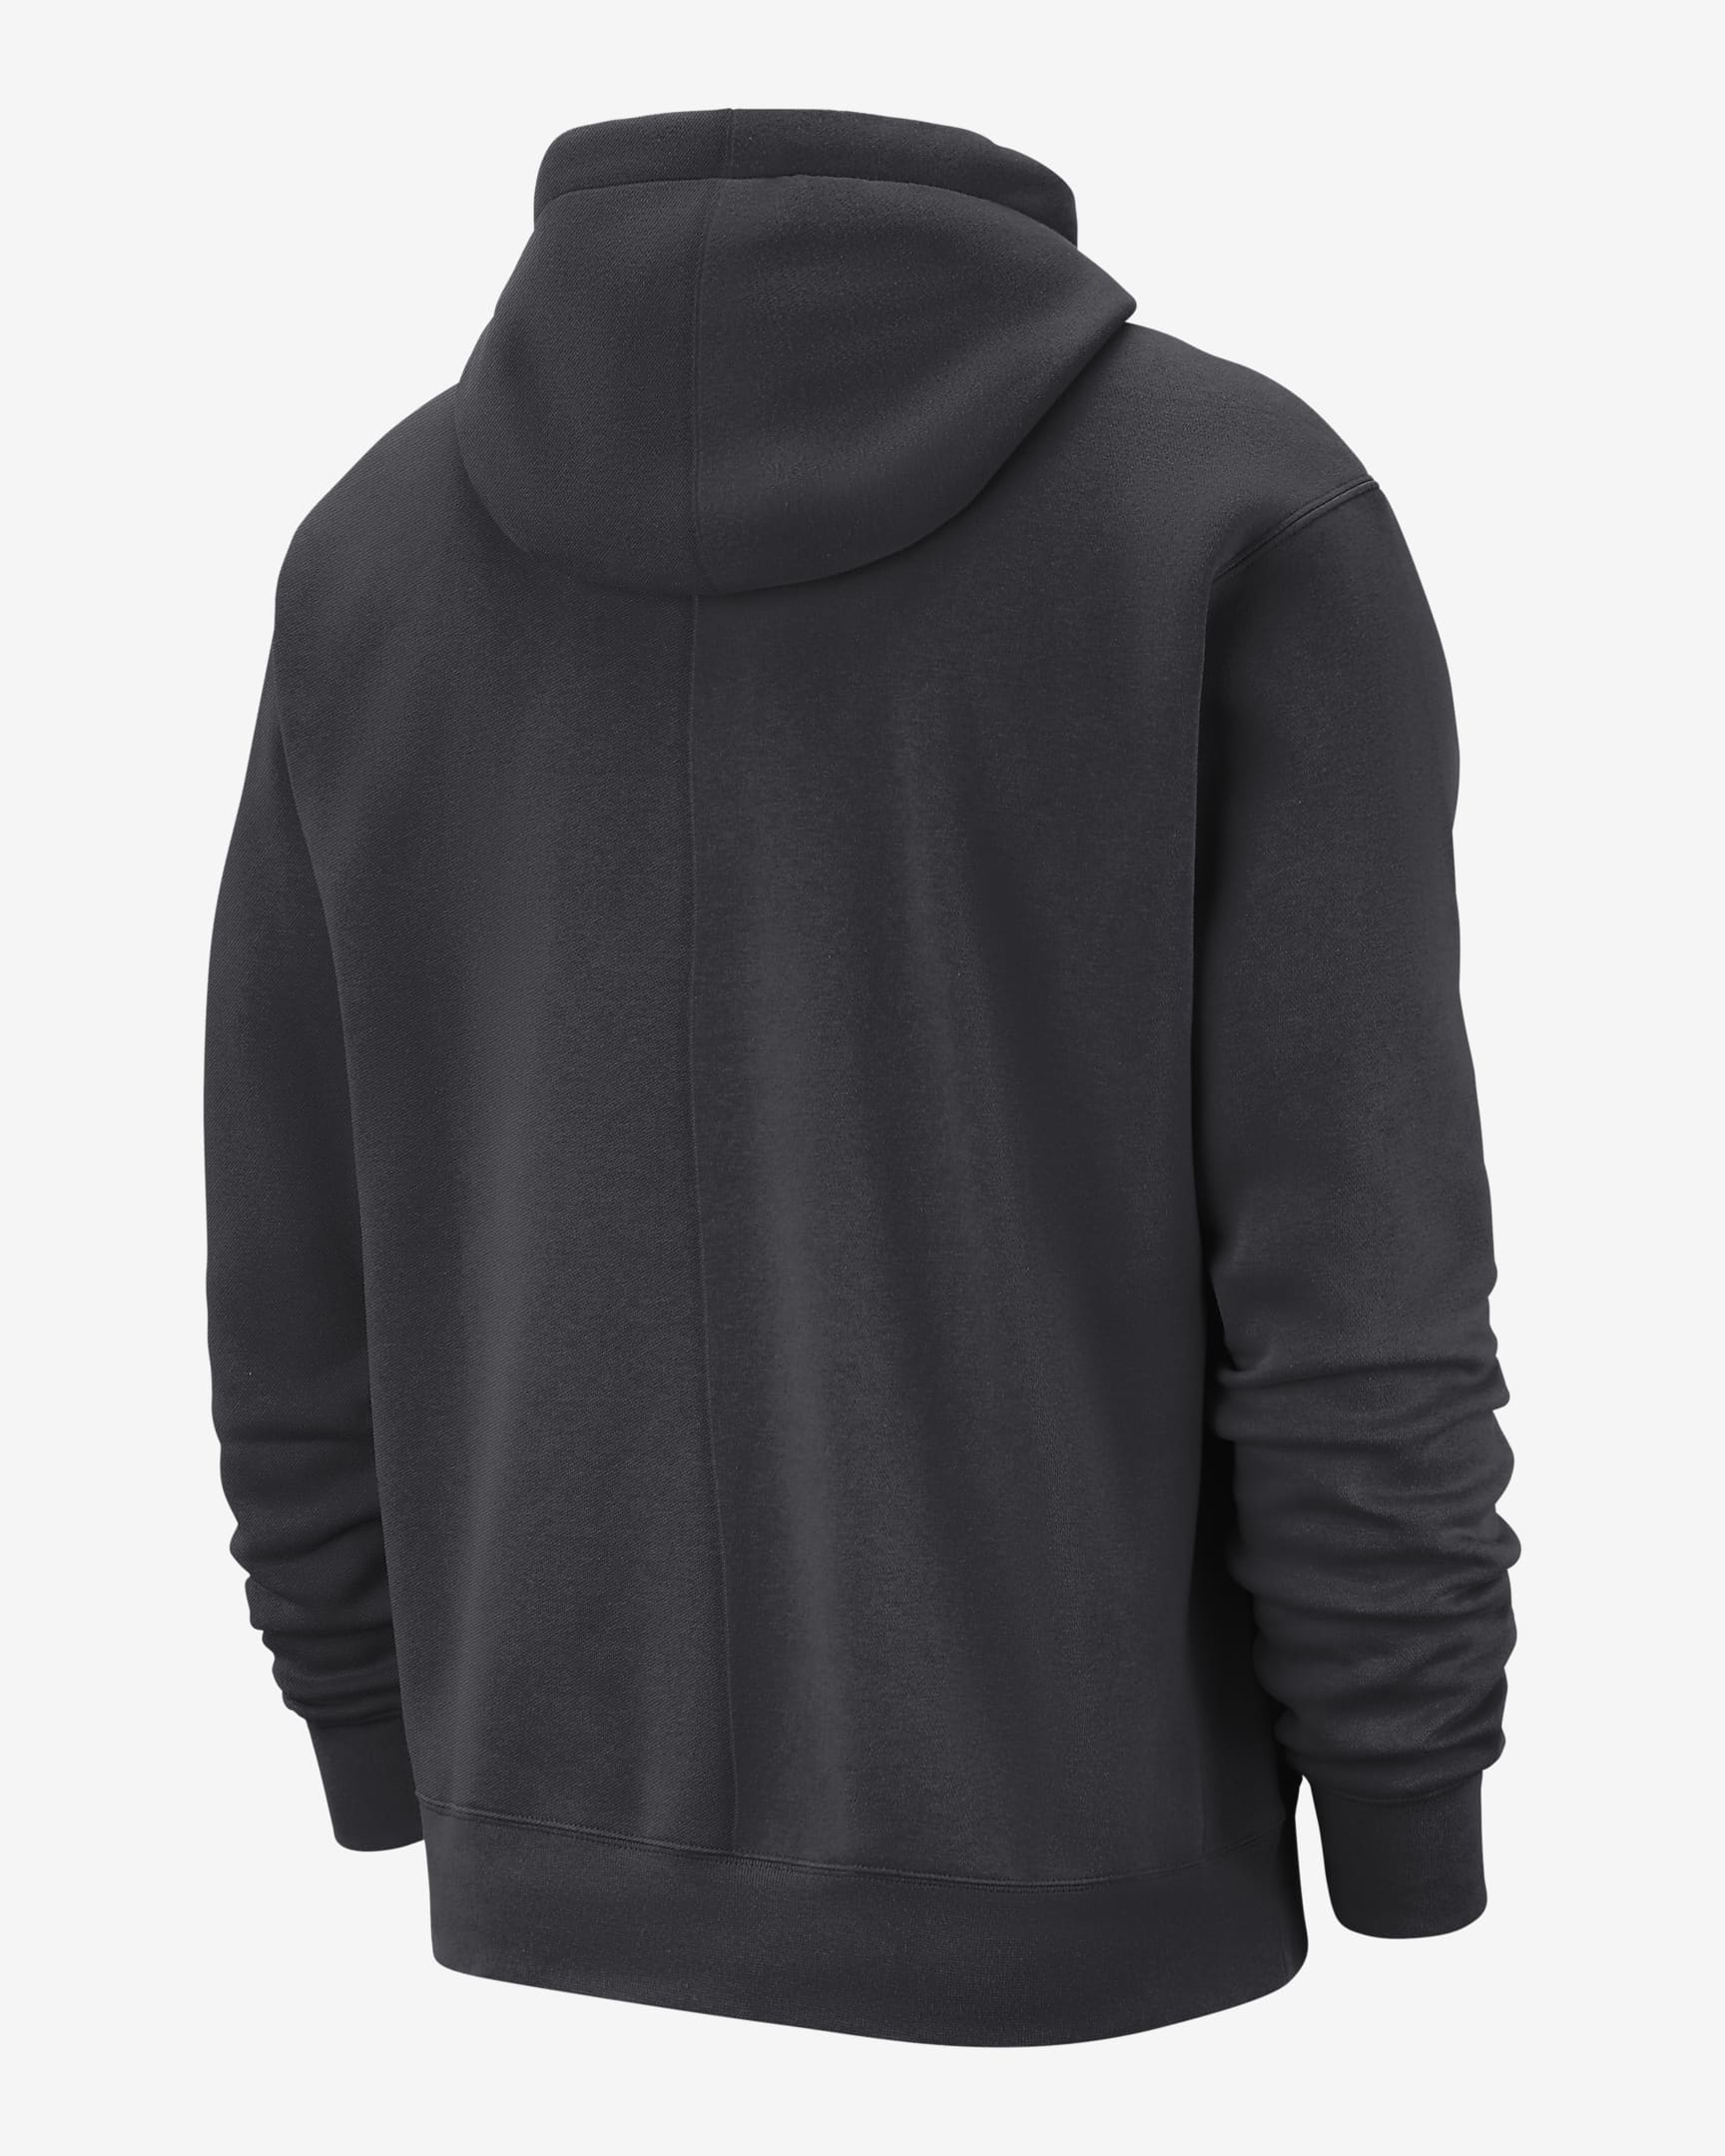 medium weight mens pullover hoodie